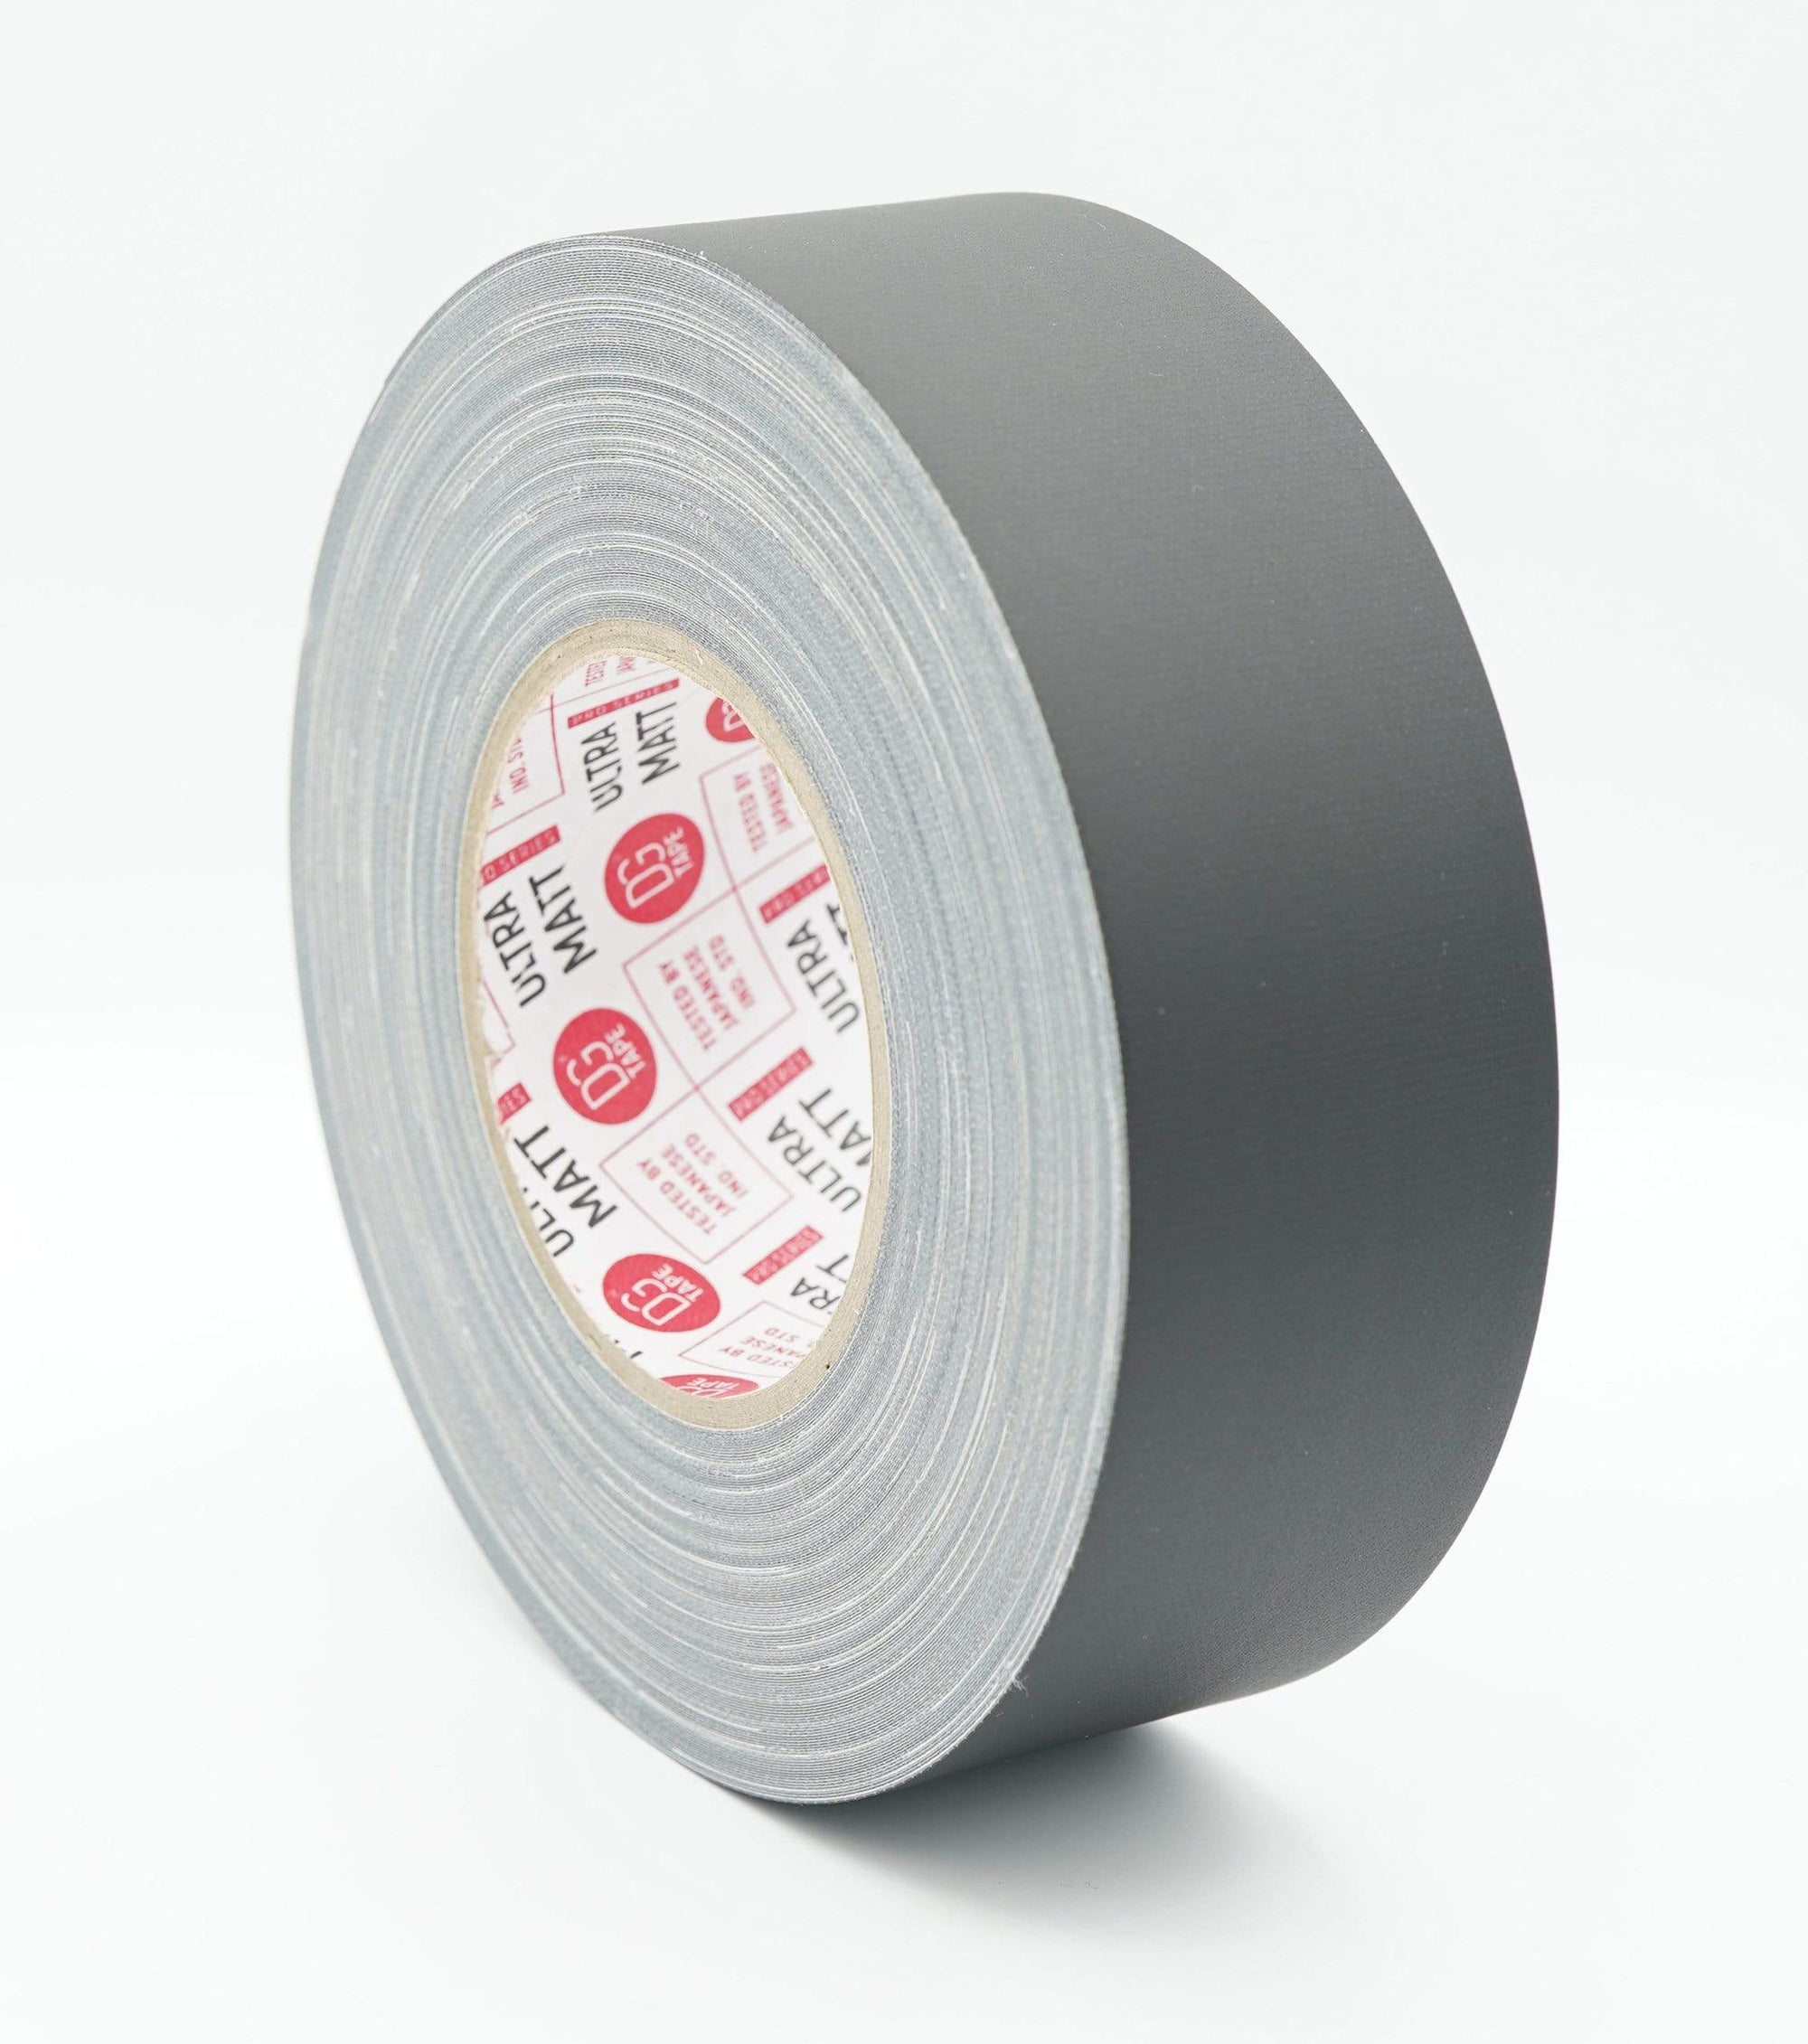 Environmentally Focused Gaffer Tape - MagTape™ Ultra Matt